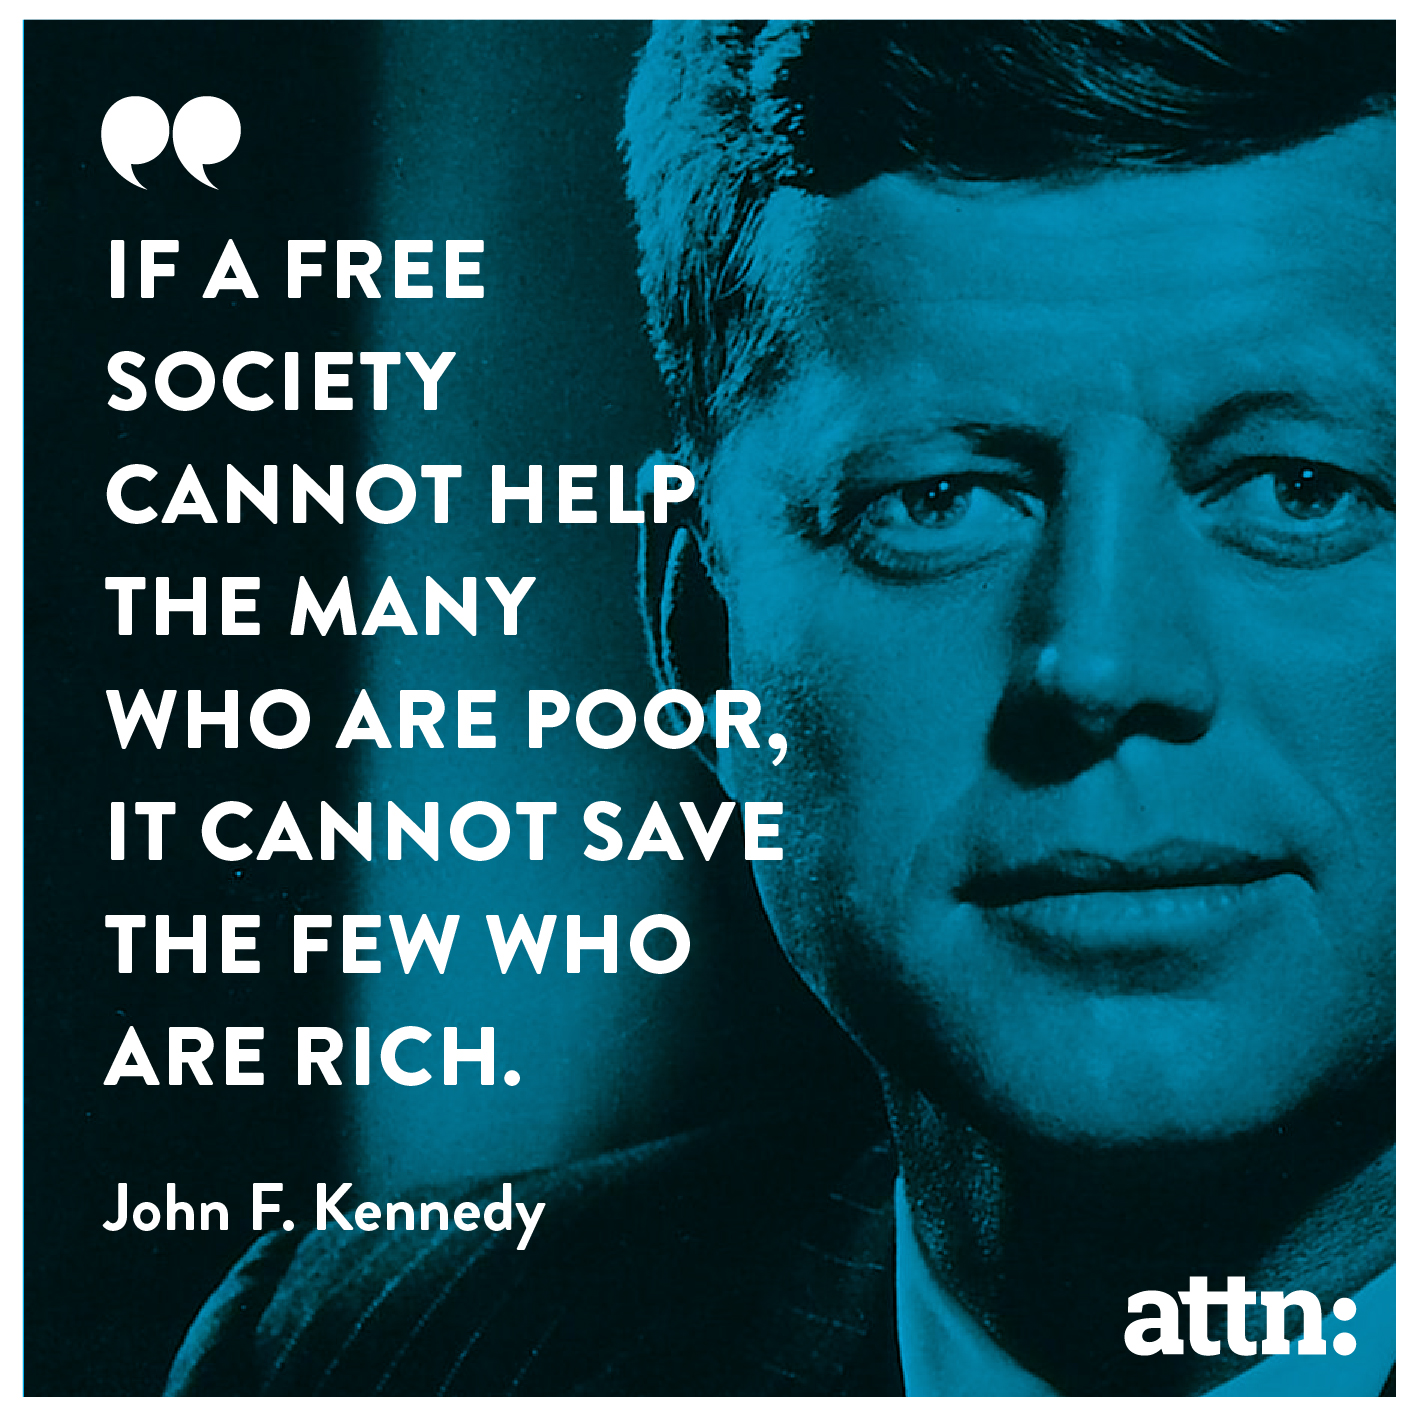 John F. Kennedy on income inequality